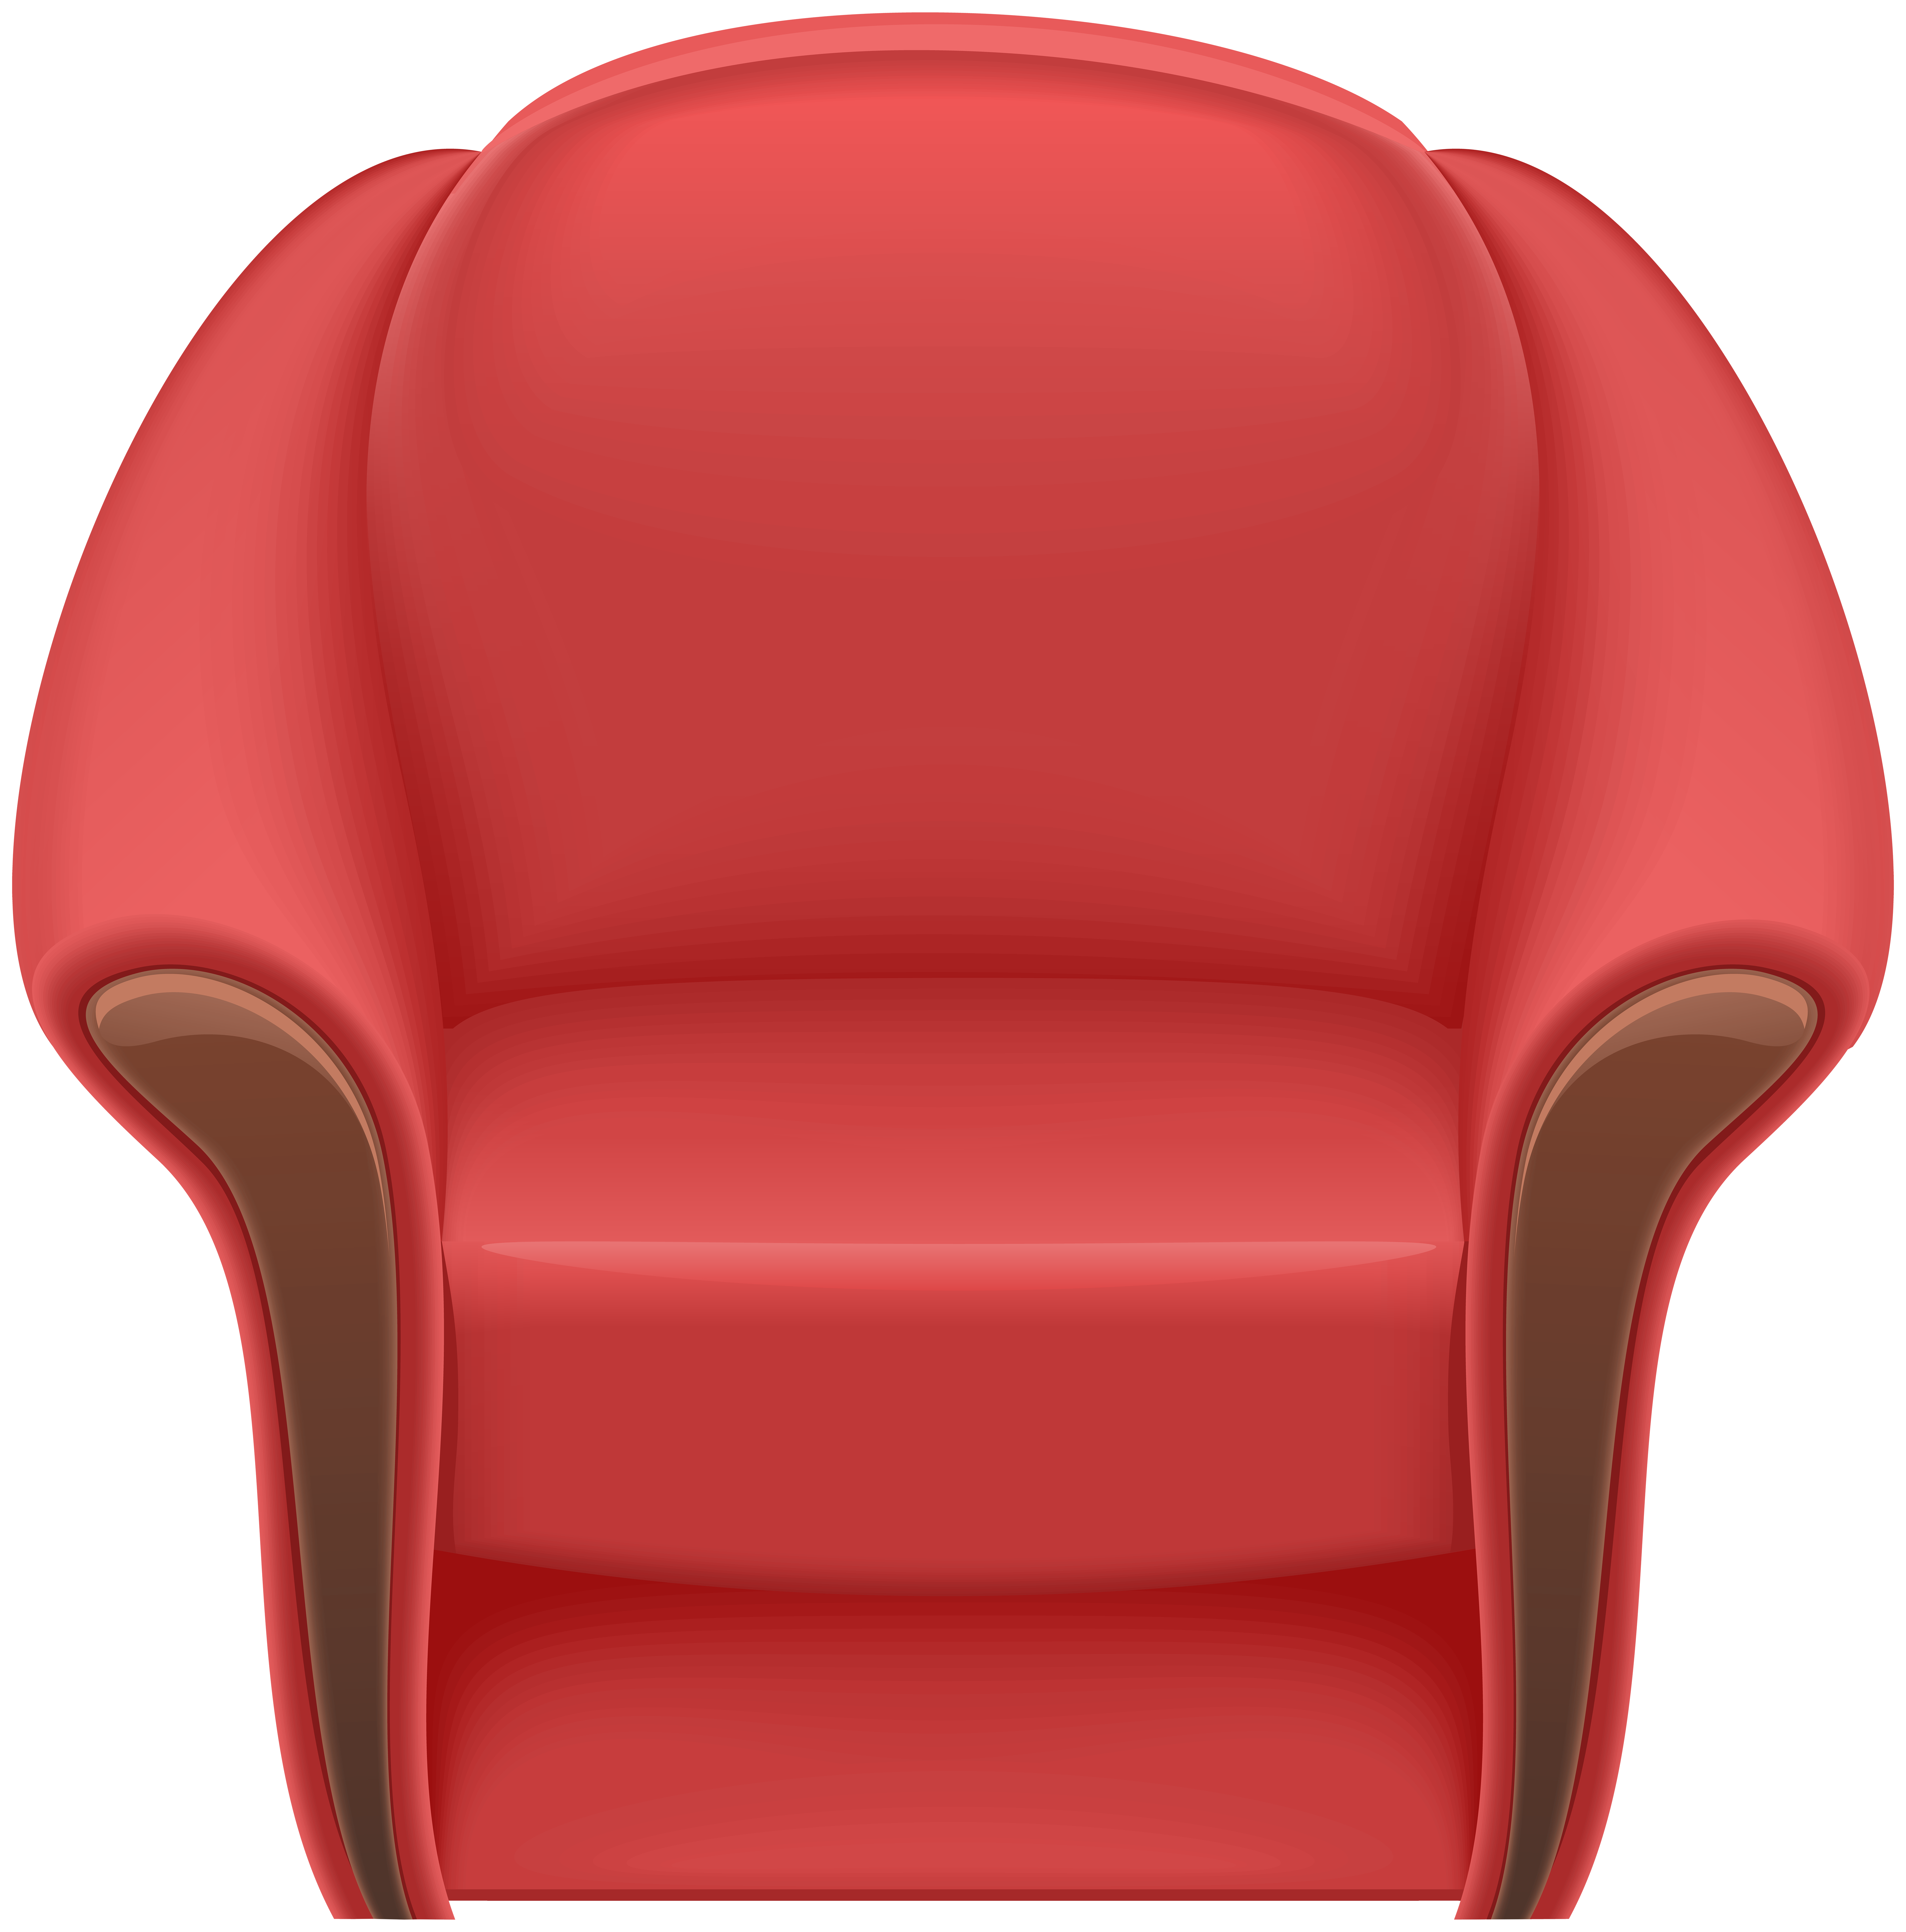 Red Armchair Transparent Clip Art.